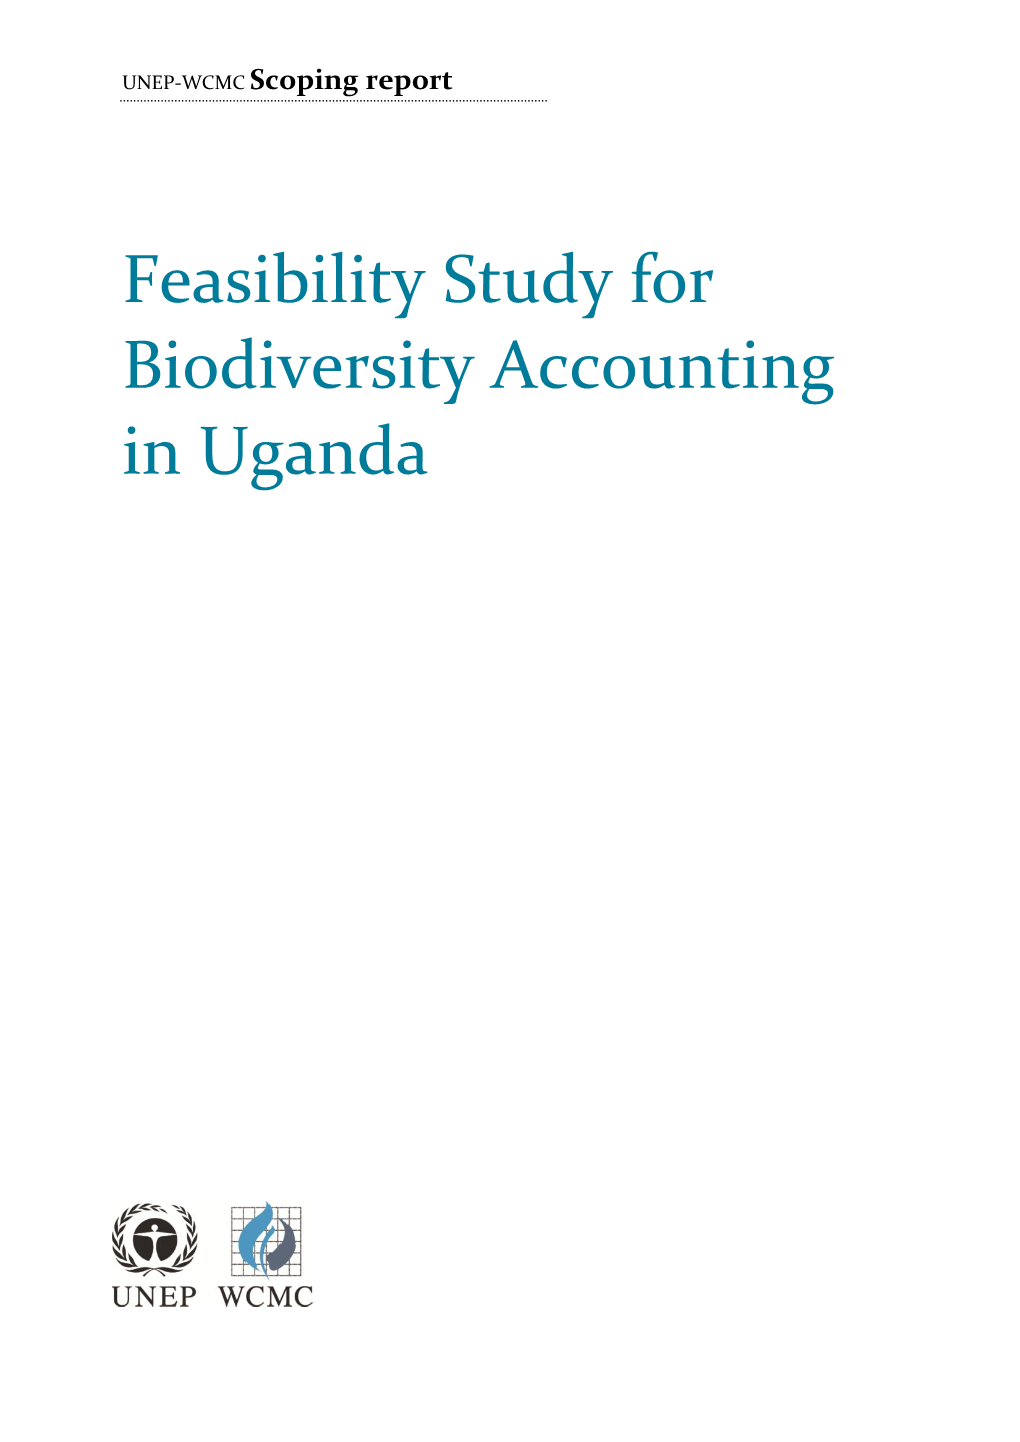 Feasibility Study for Biodiversity Accounting in Uganda